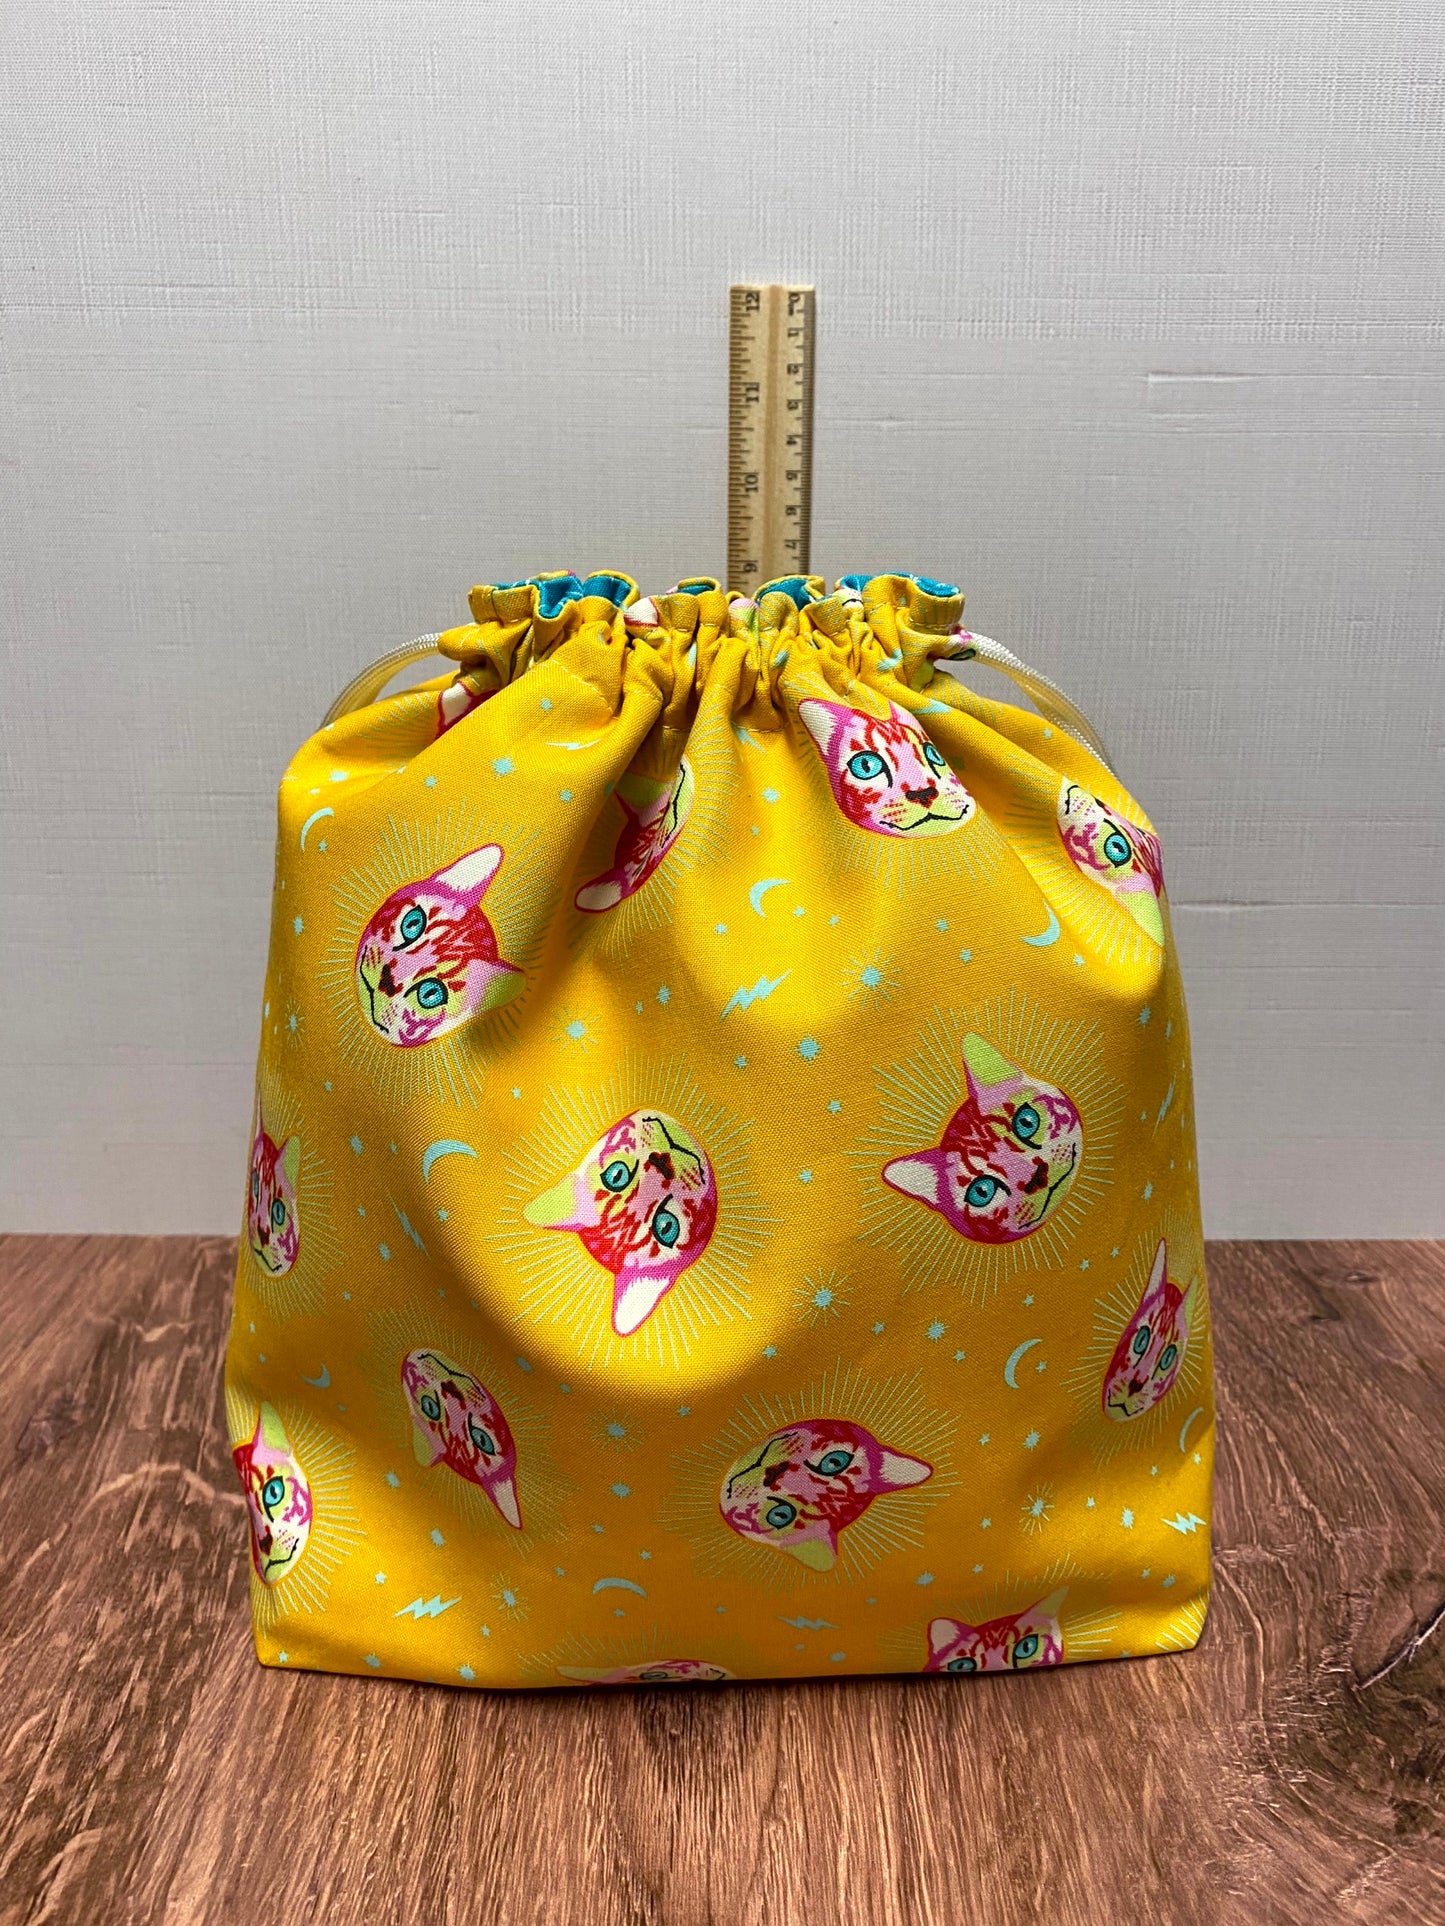 Cat Project Bag - Handmade - Drawstring Bag – Knitting Bag – Crochet Bag - Cross Stitch Bag - Toy Sack - Bingo Bag - Curiouser